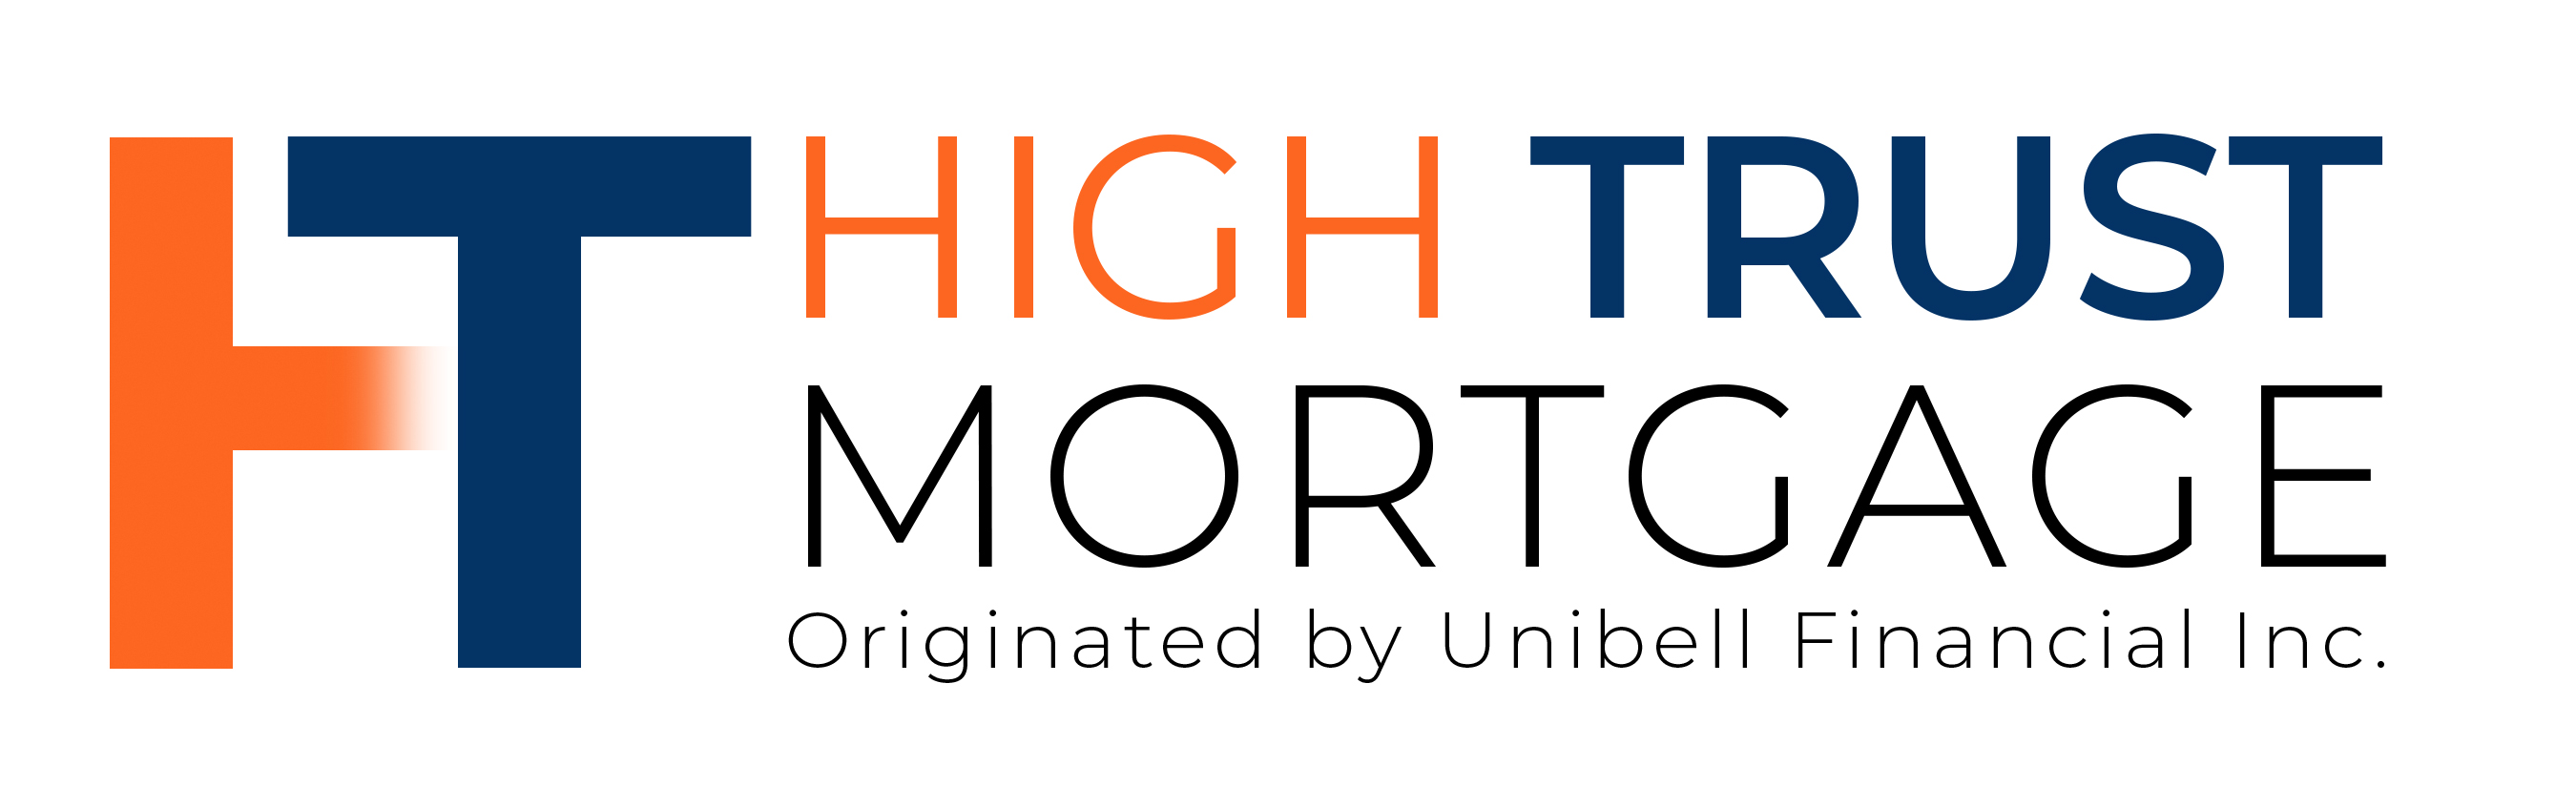 High Trust Mortgage